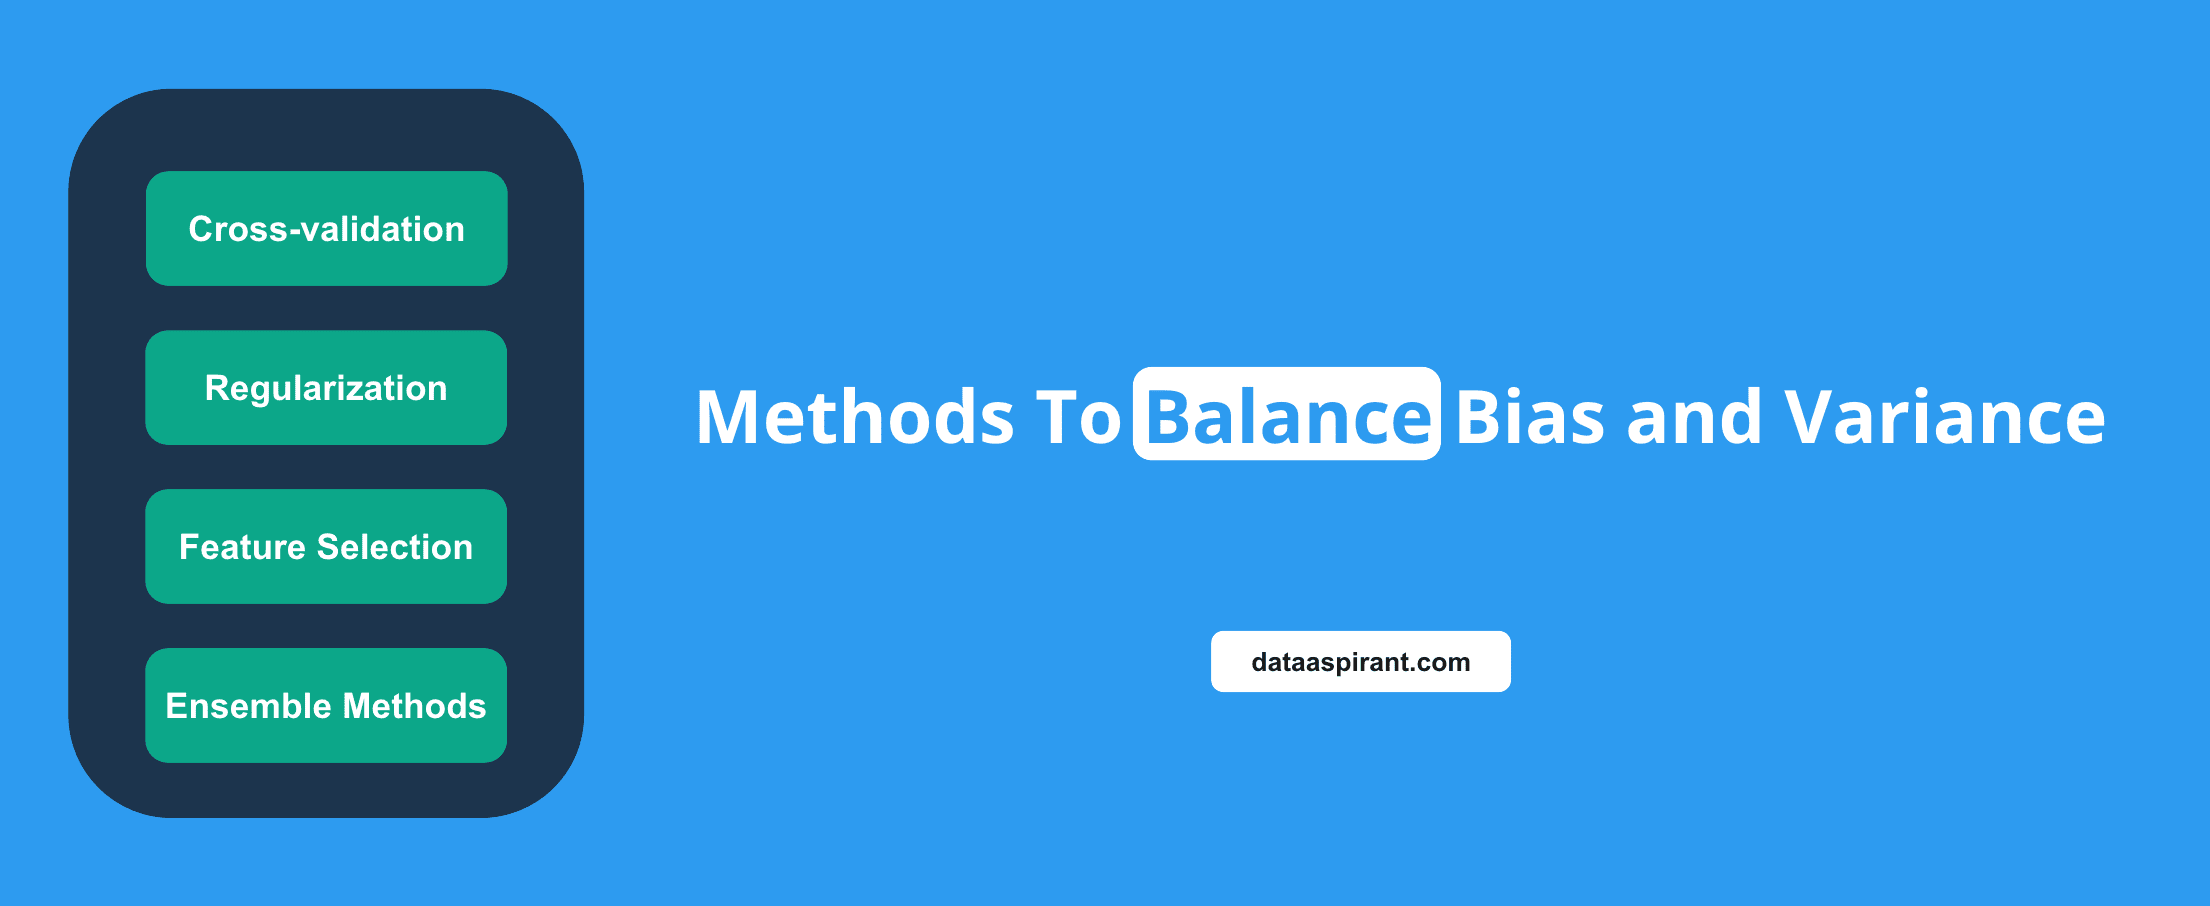 Balancing Bias and Variance